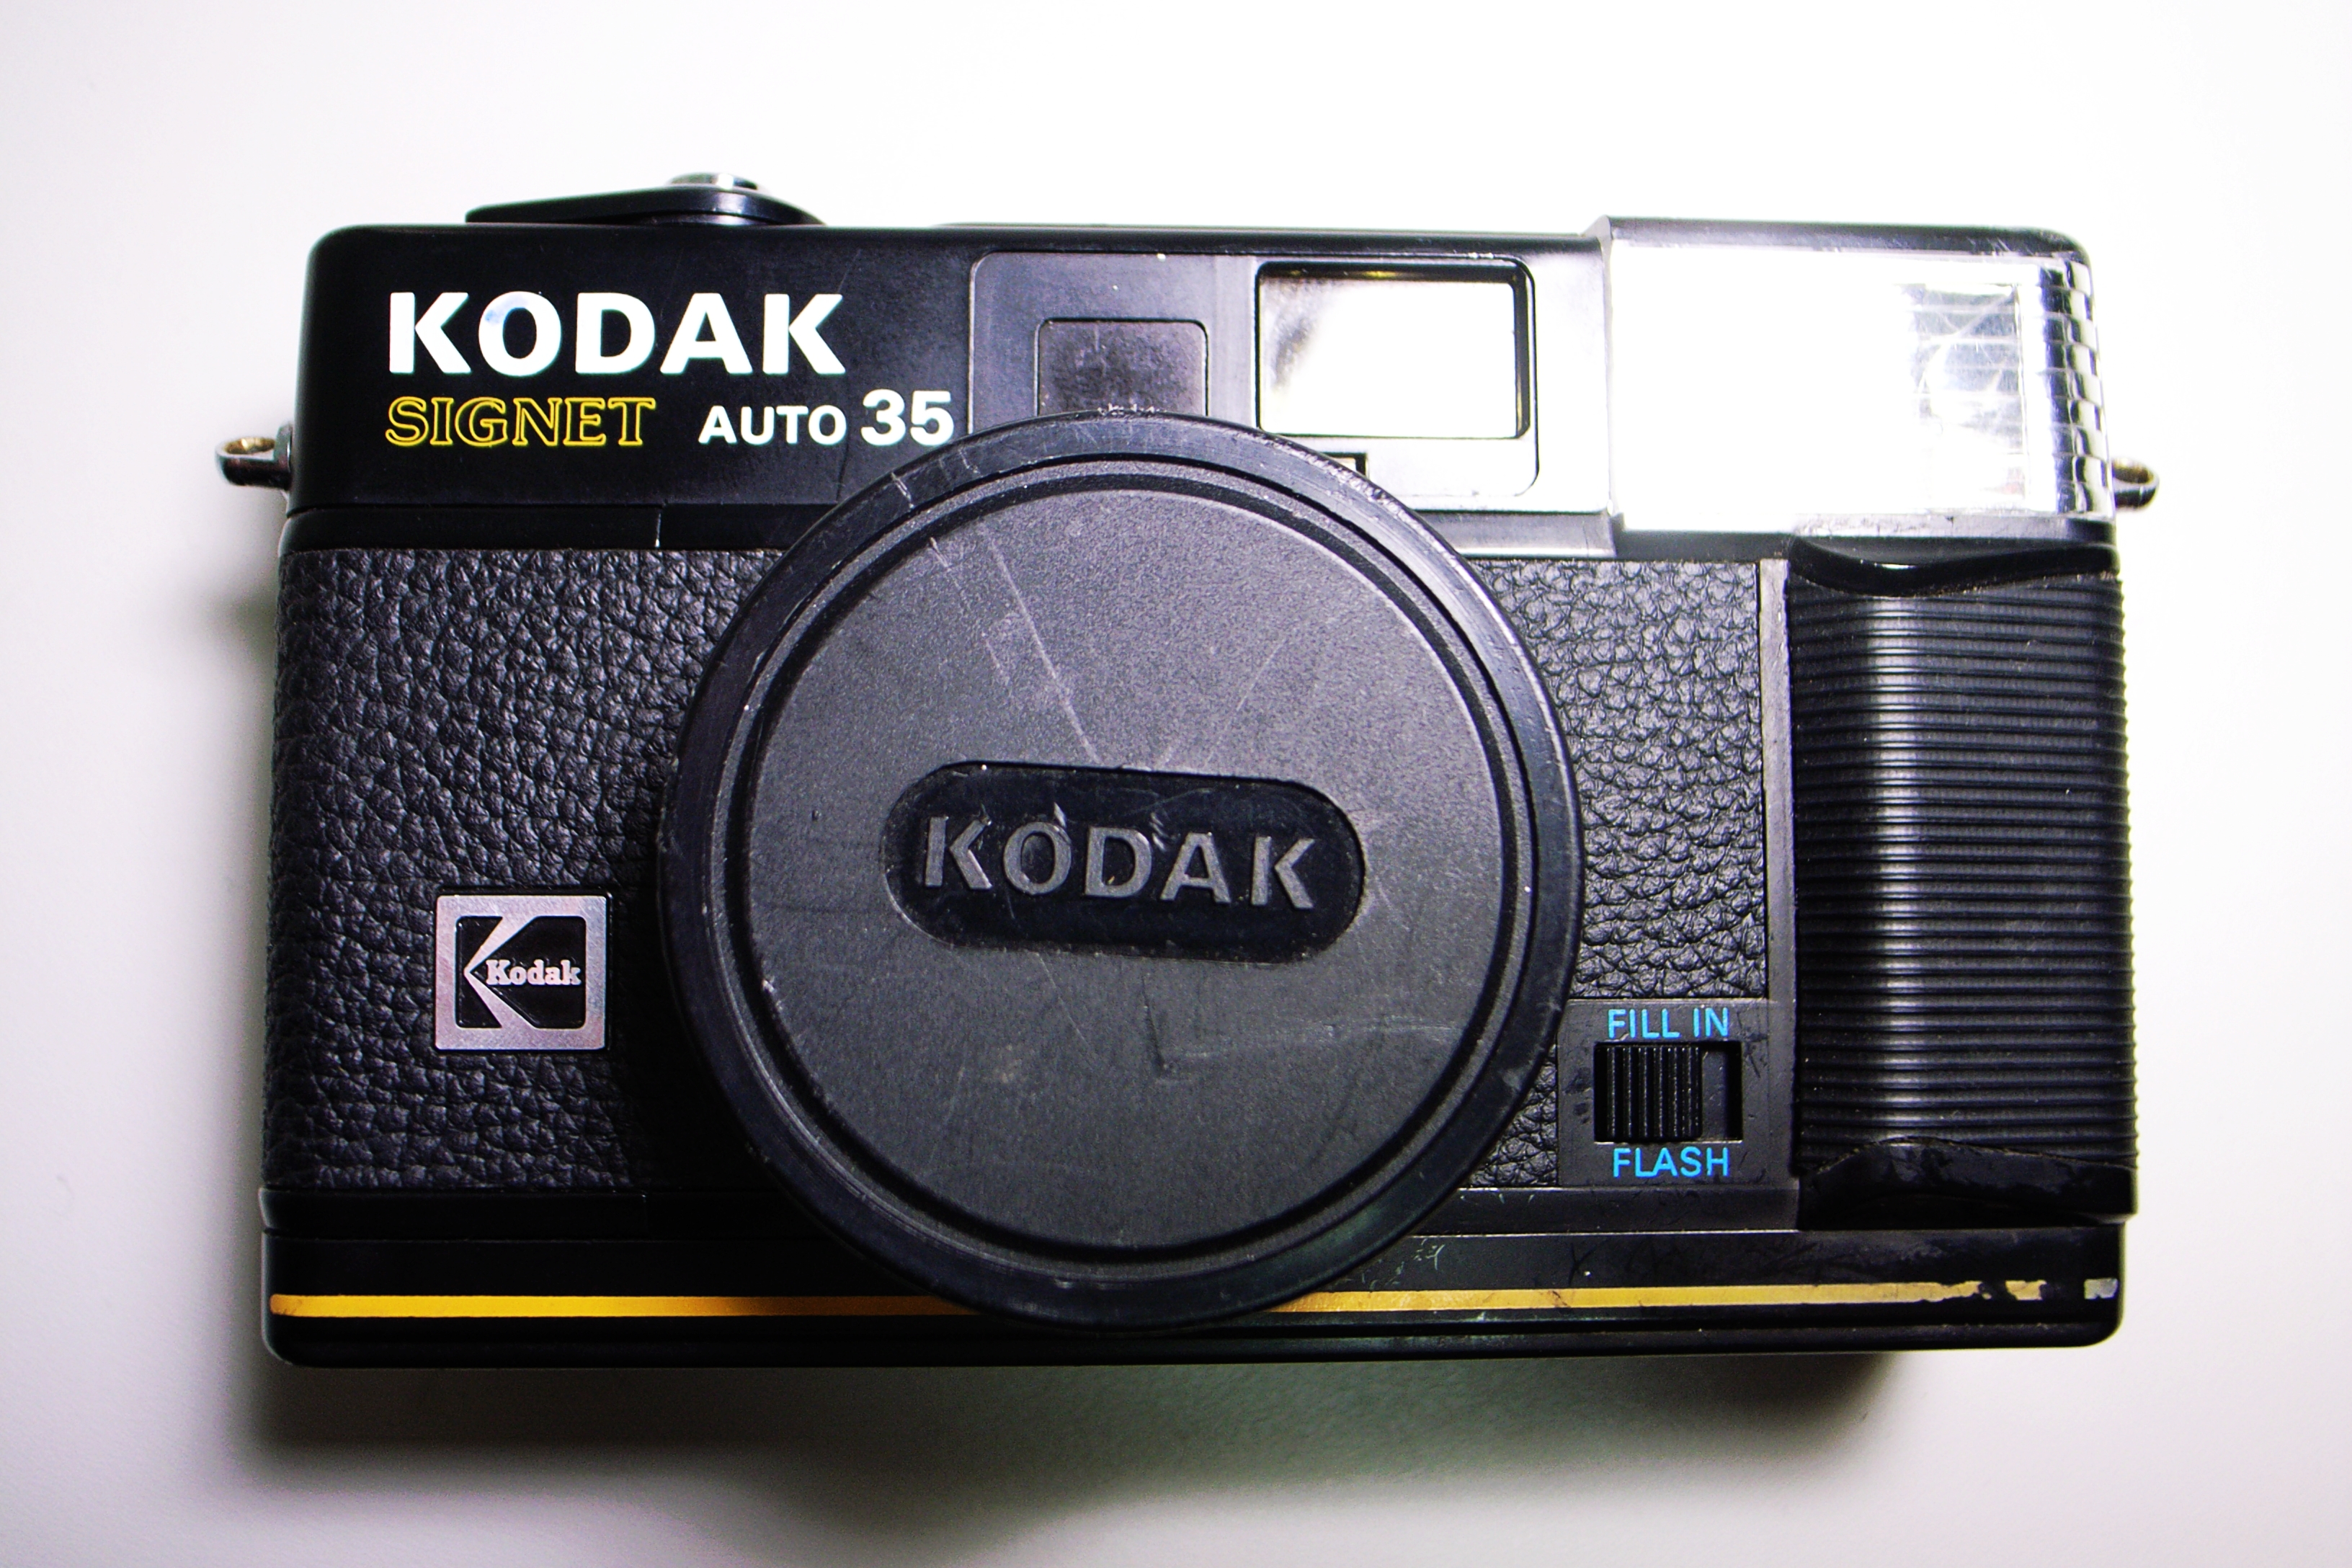 Kodak Signet Auto 35 20070206